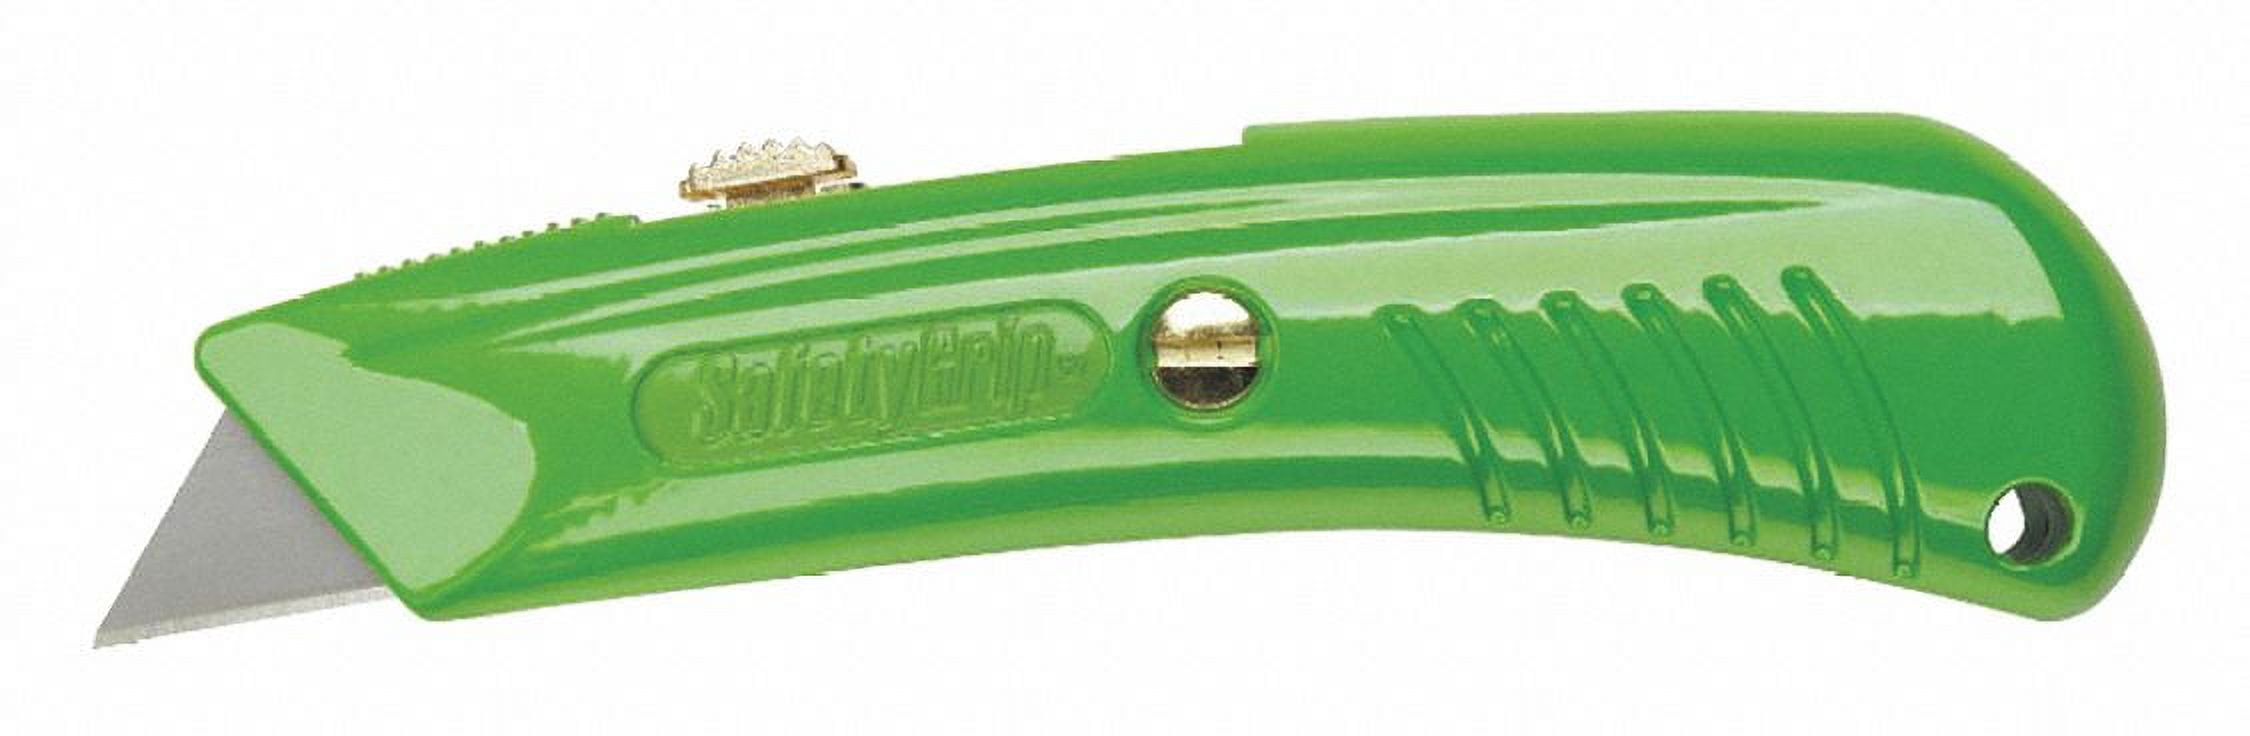 Hygiplas Vegetable Knife Green 100mm - C860 - Buy Online at Nisbets